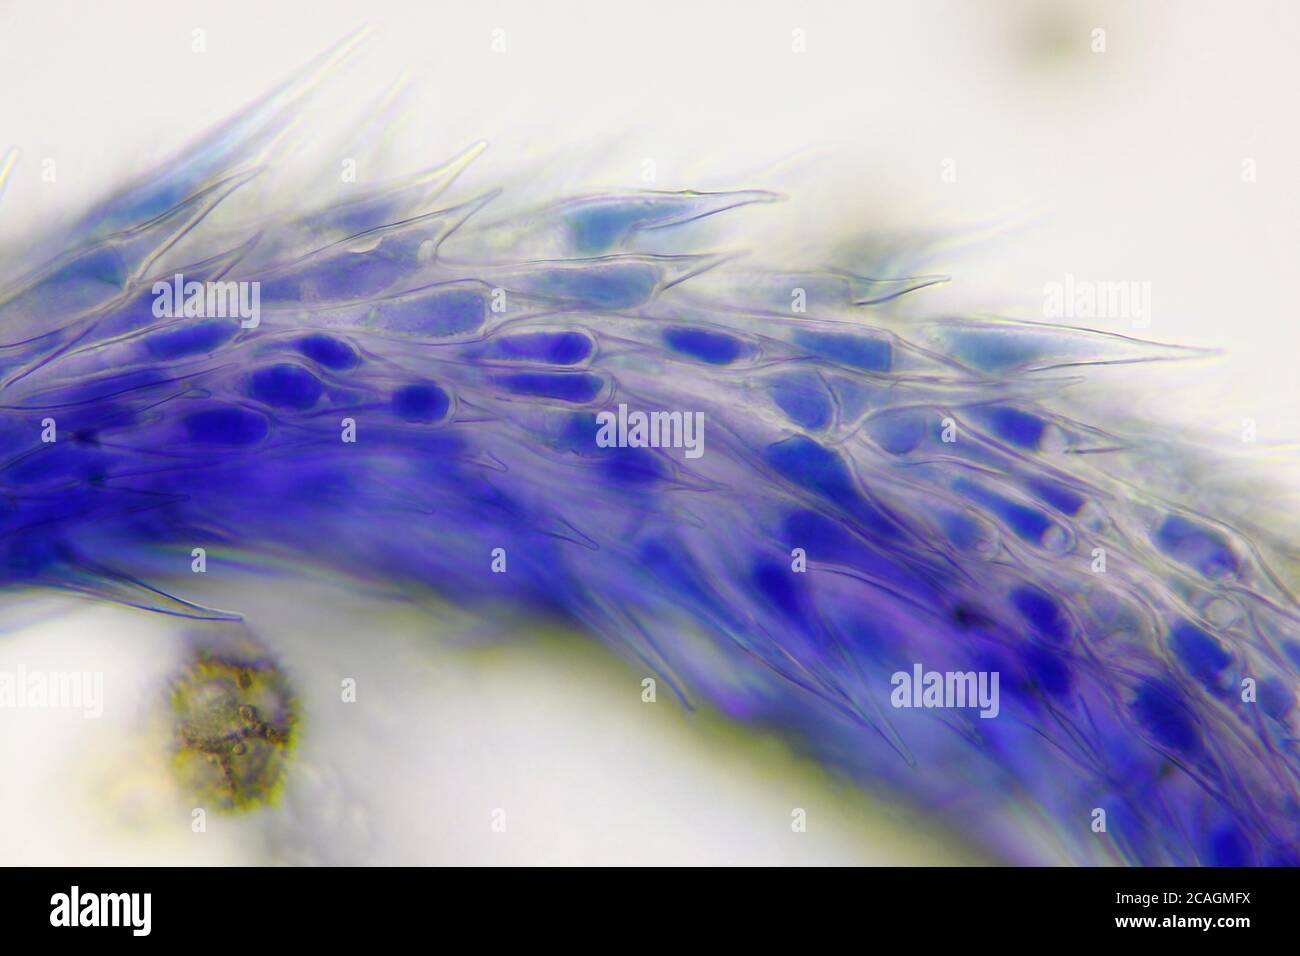 Microscopic view of a Common chicory (Cichorium intybus) flower stigma detail. Brightfield illumination. Stock Photo